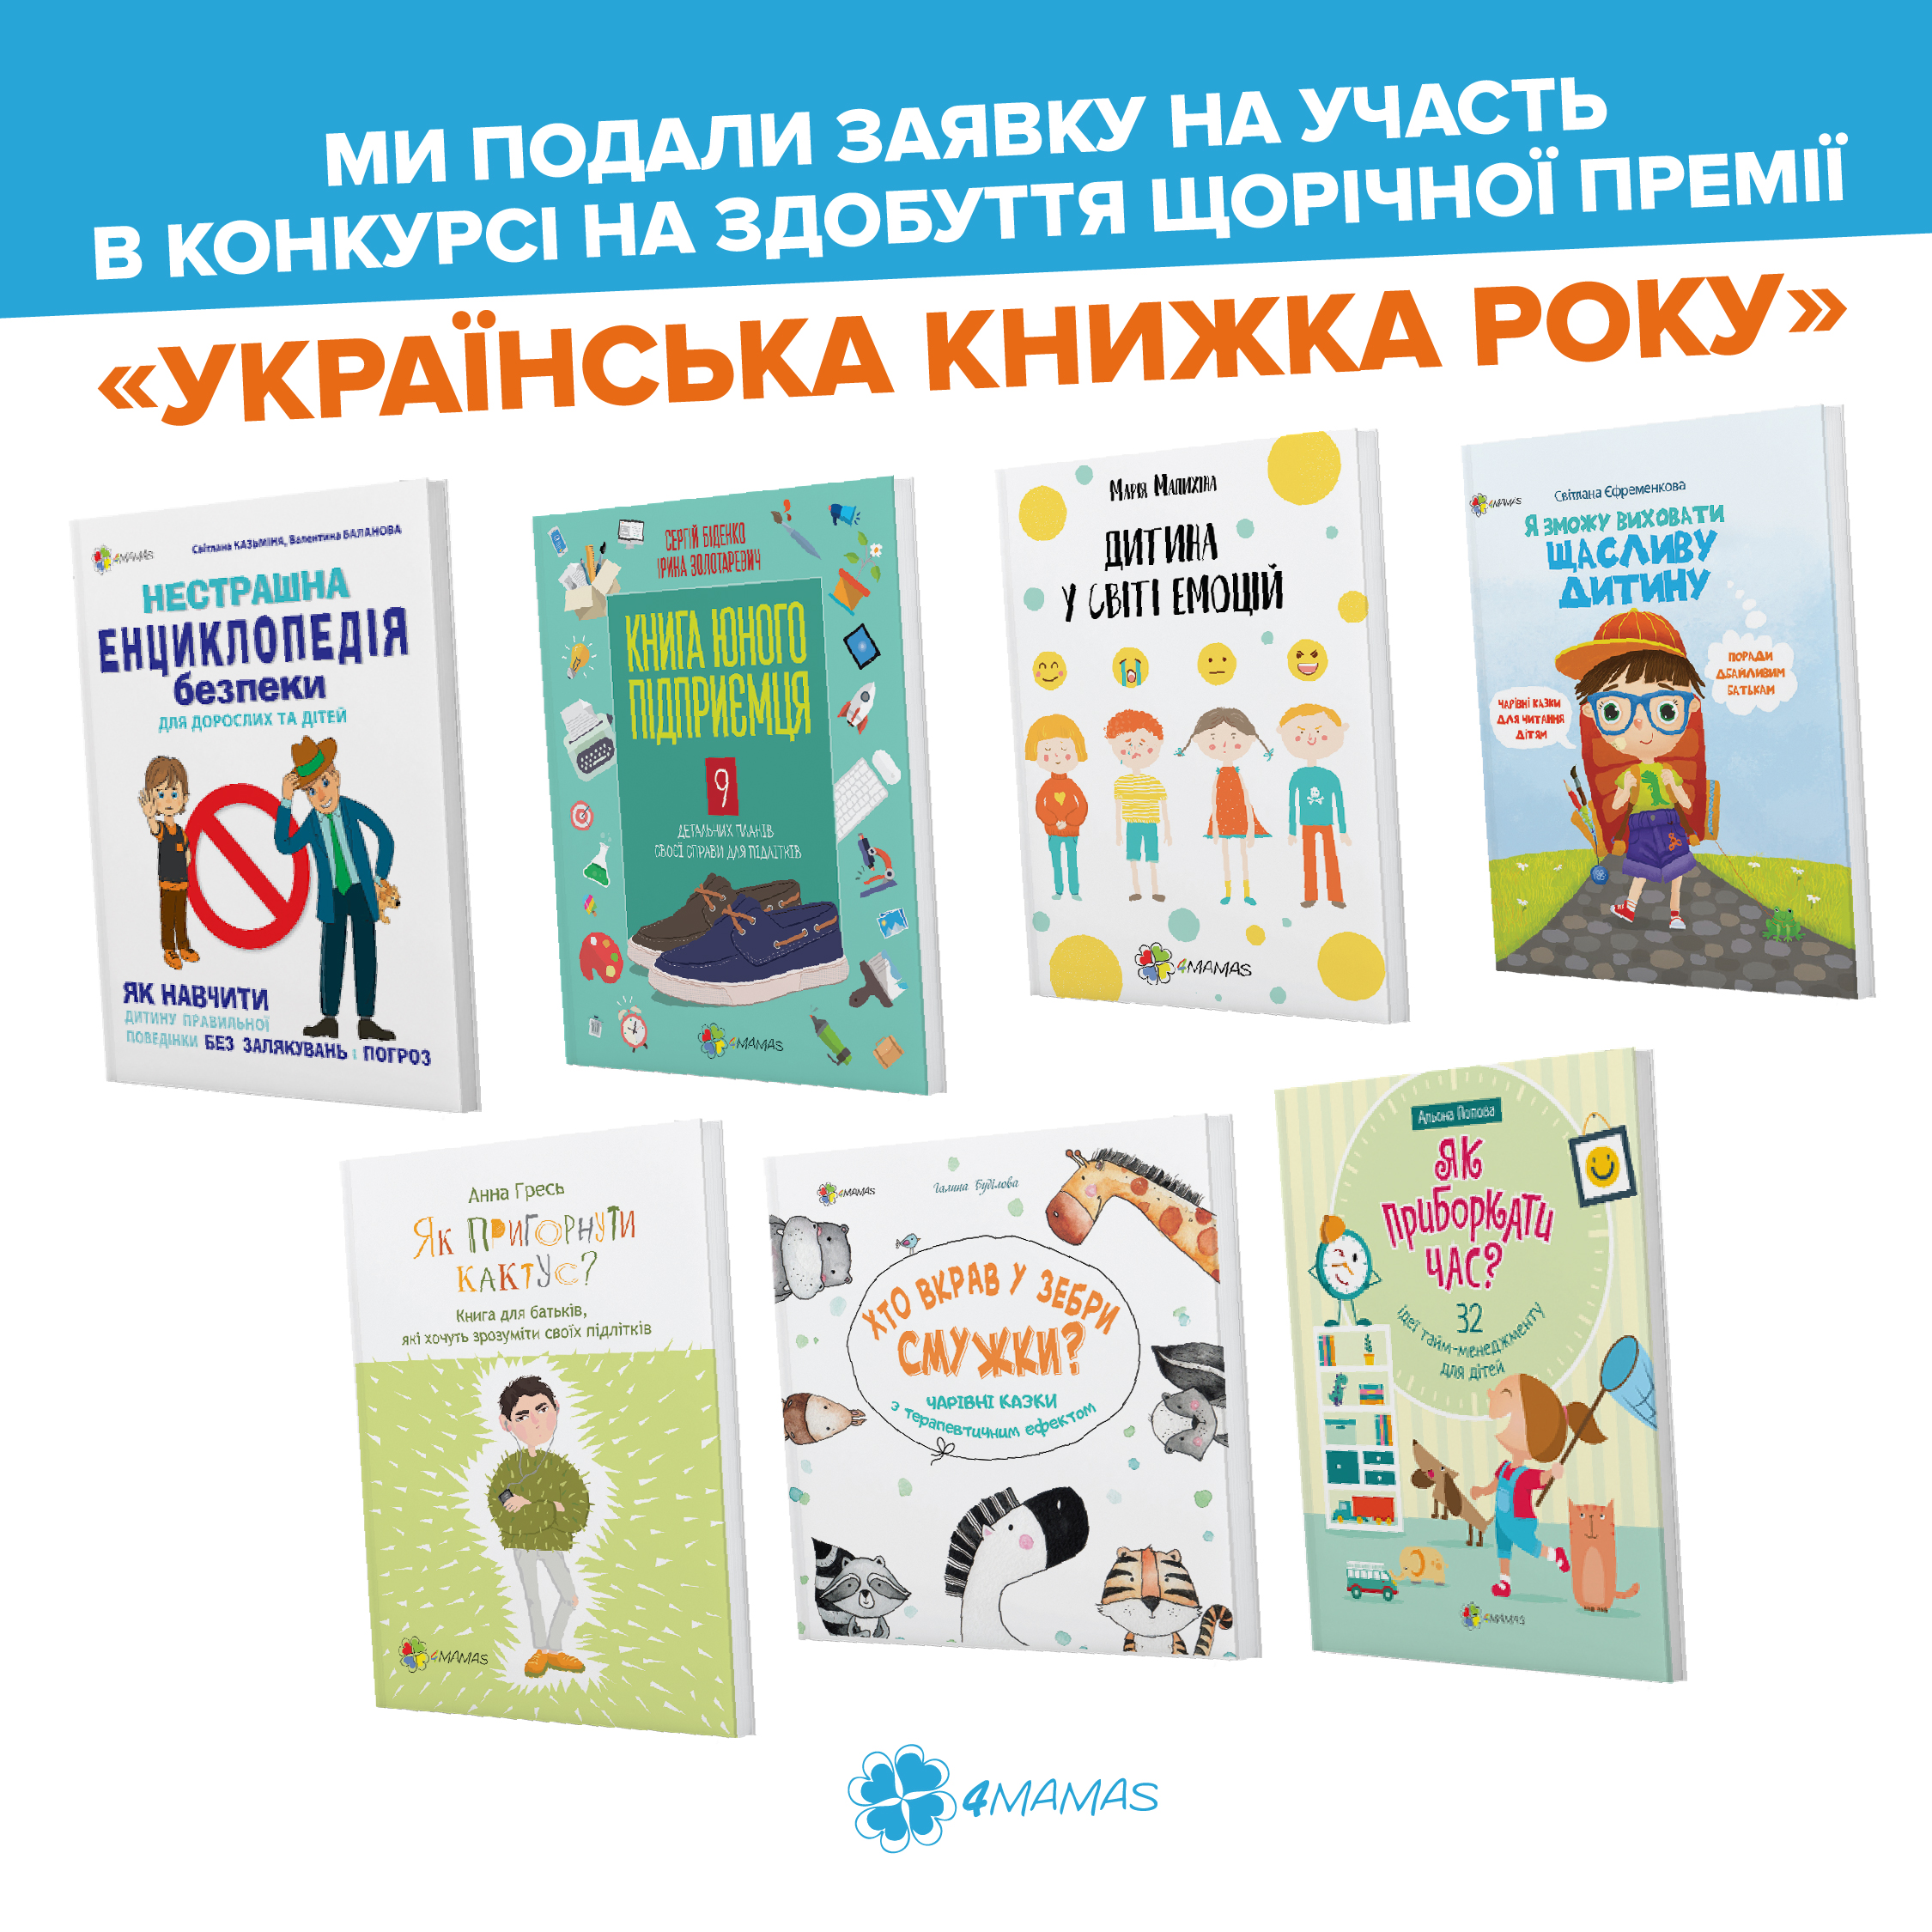 Українська книжка року!